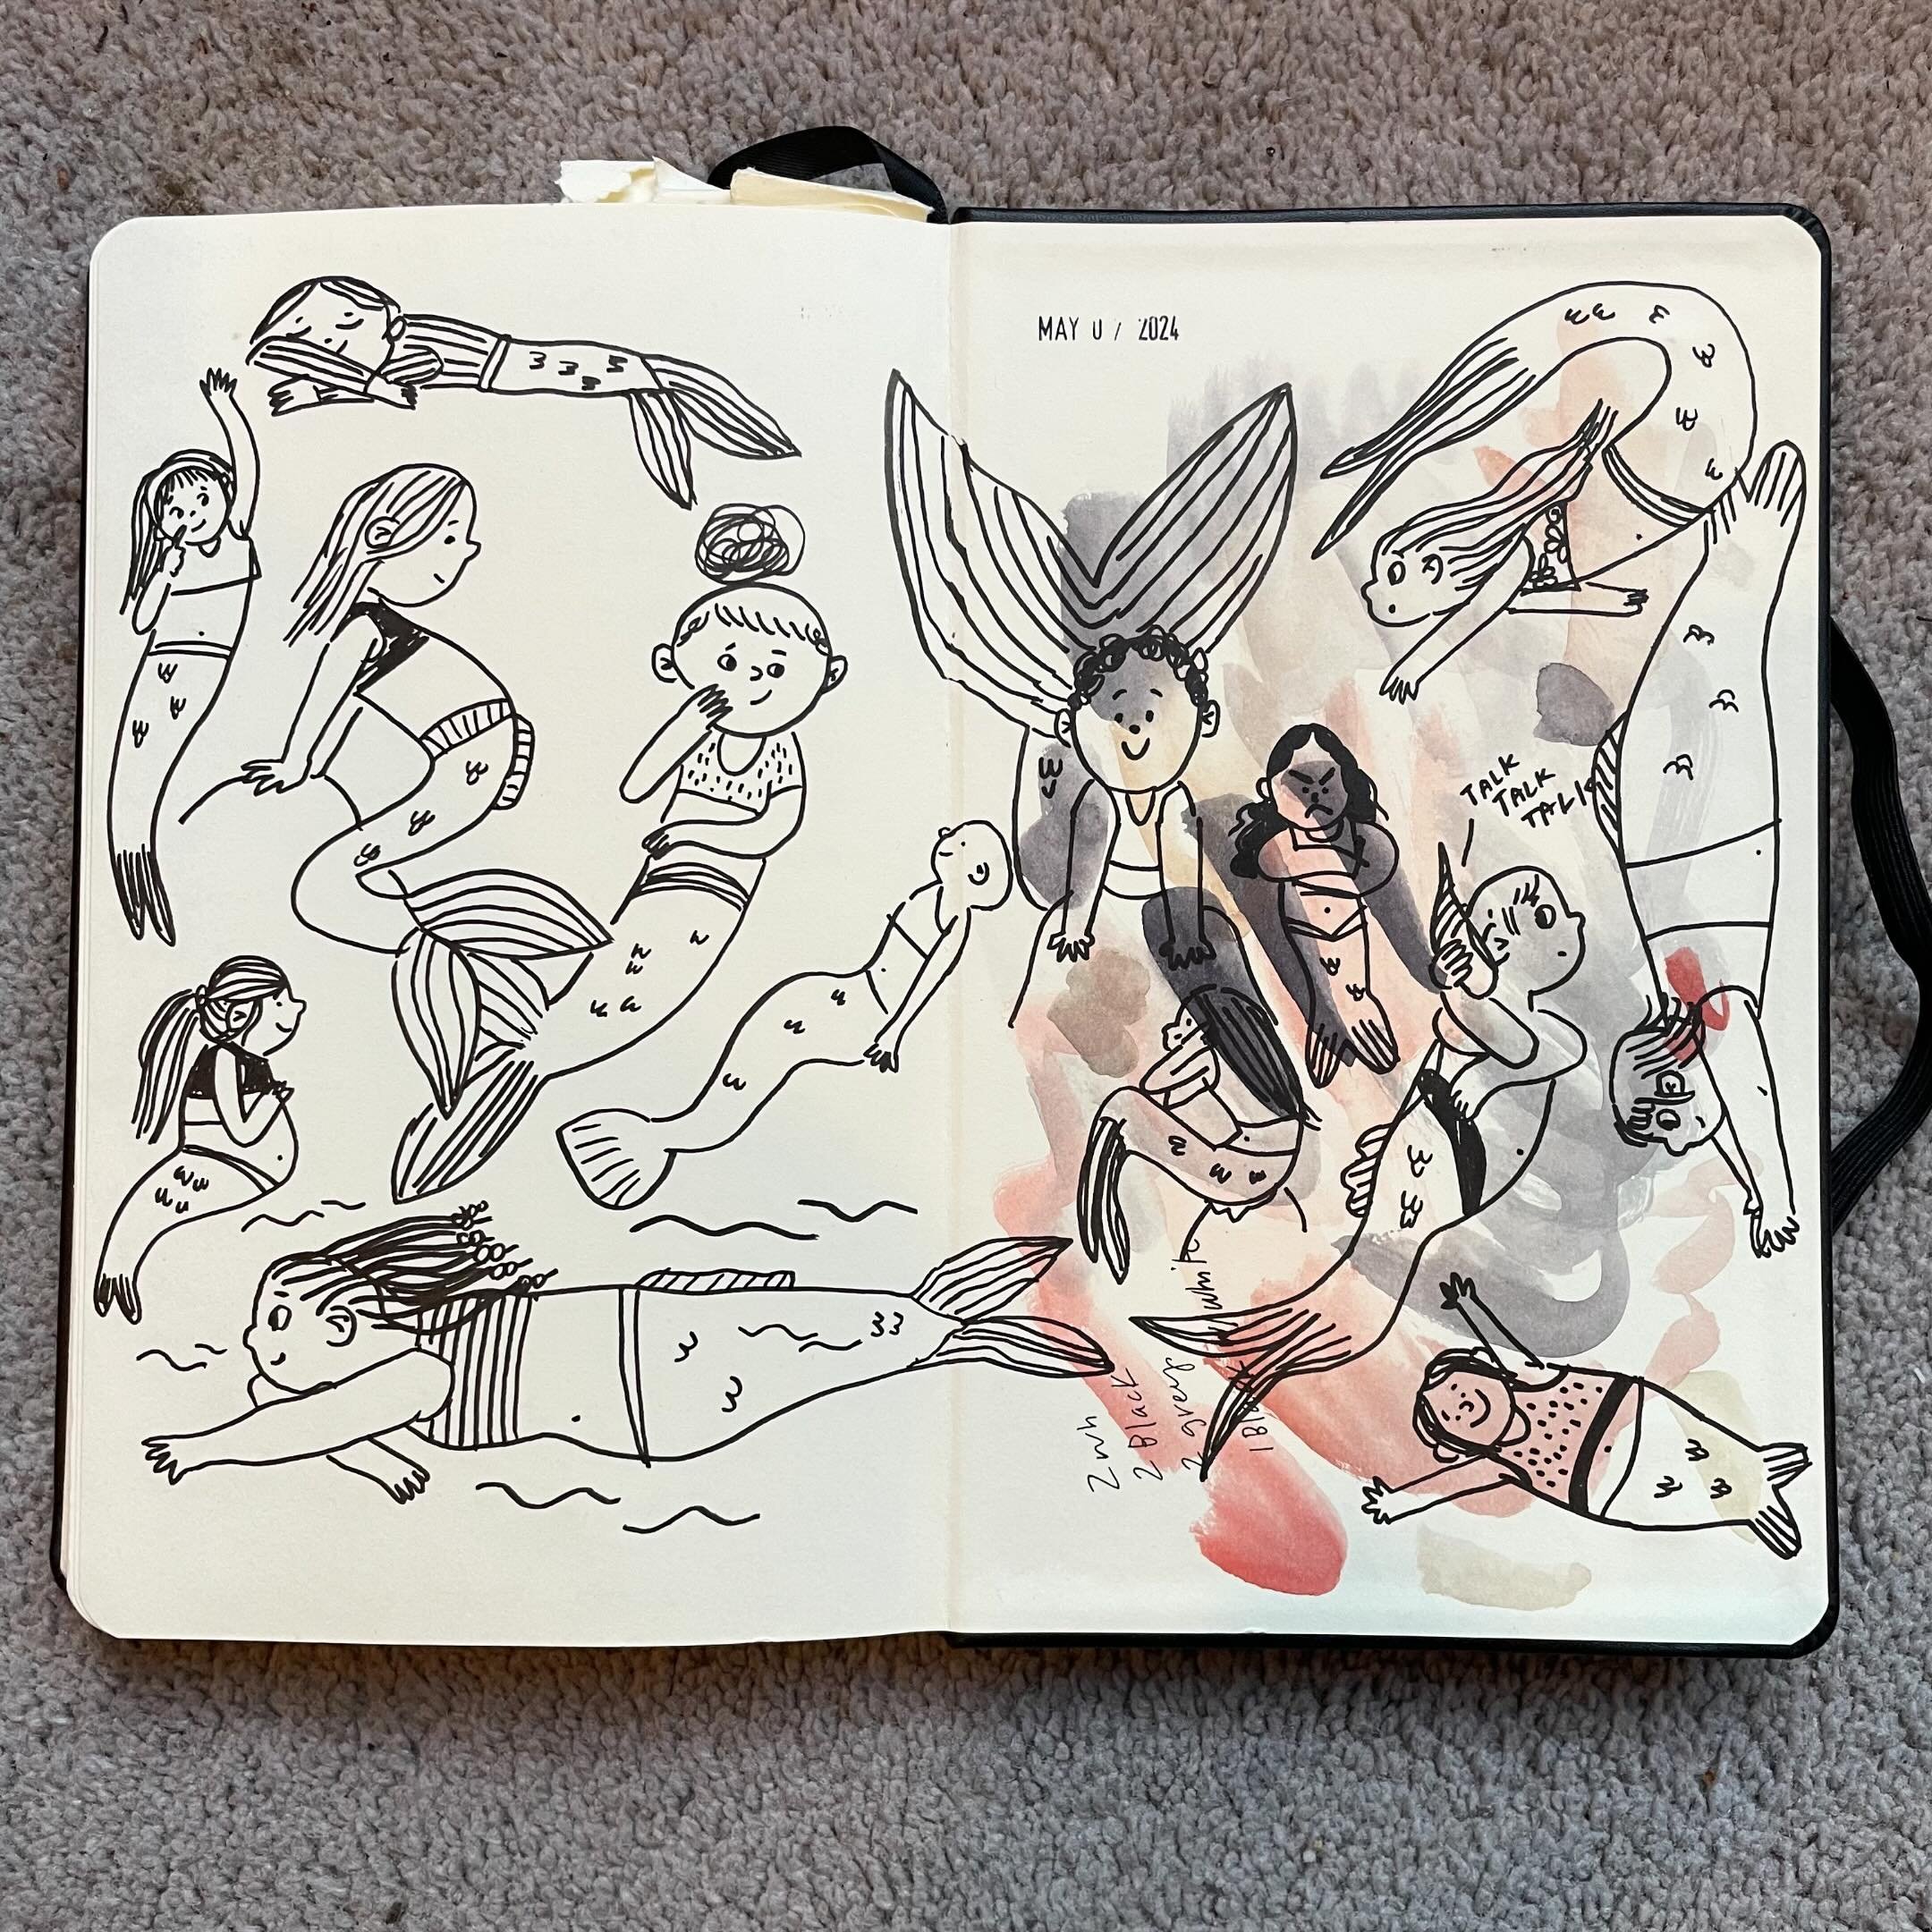 Early morning, last page of the sketchbook, mermaid doodles for #mermay